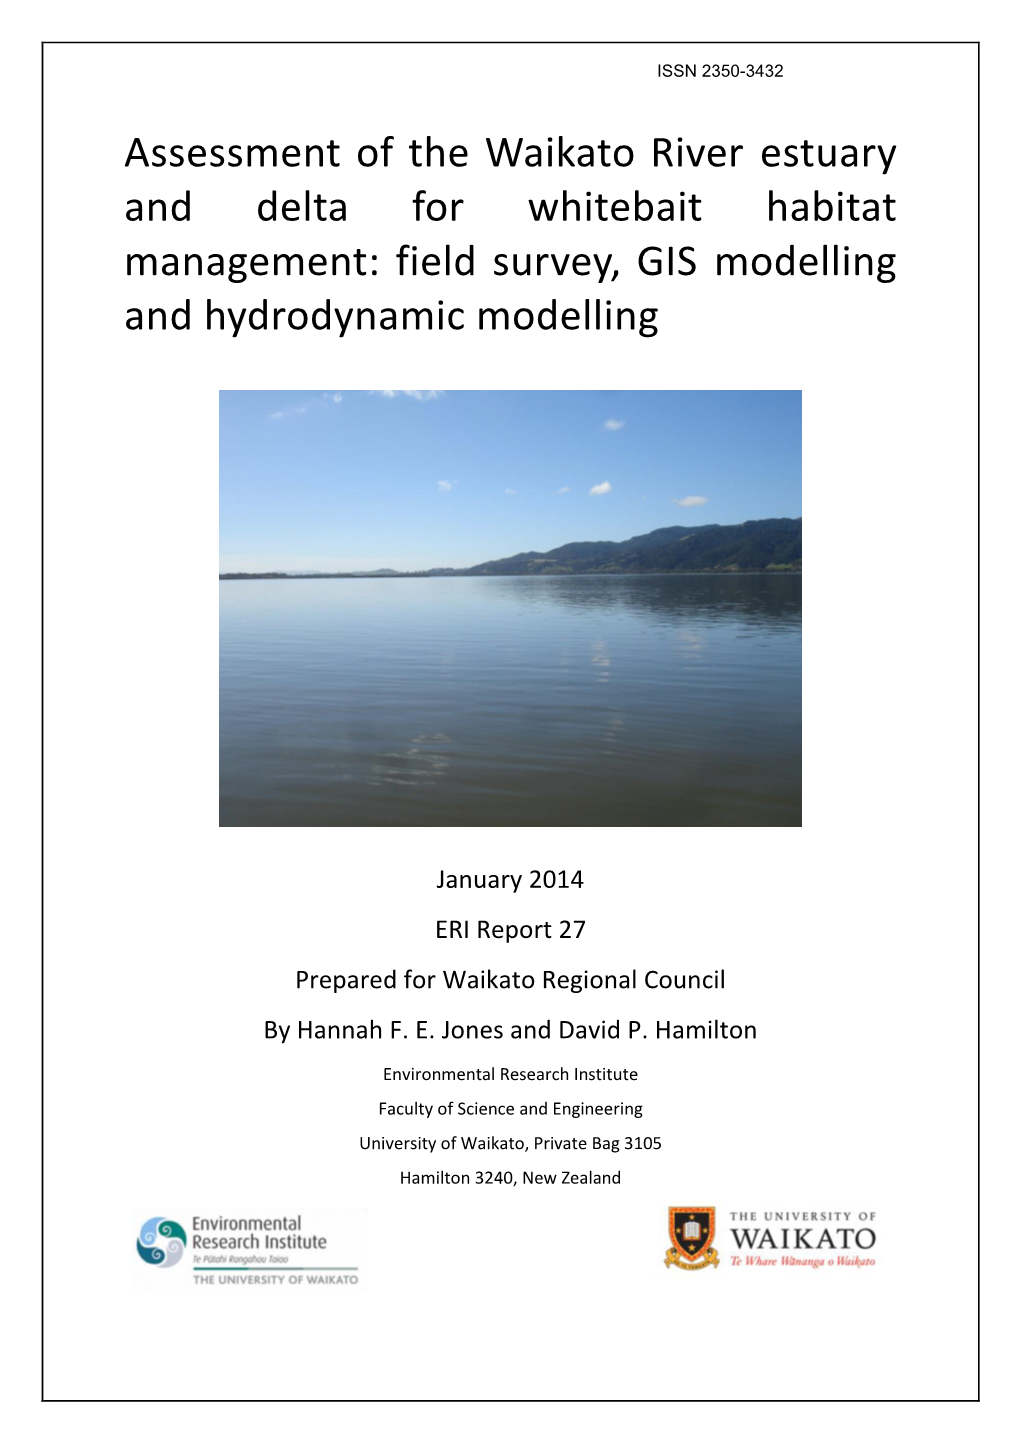 Assessment of the Waikato River Estuary and Delta for Whitebait Habitat Management: Field Survey, GIS Modelling and Hydrodynamic Modelling